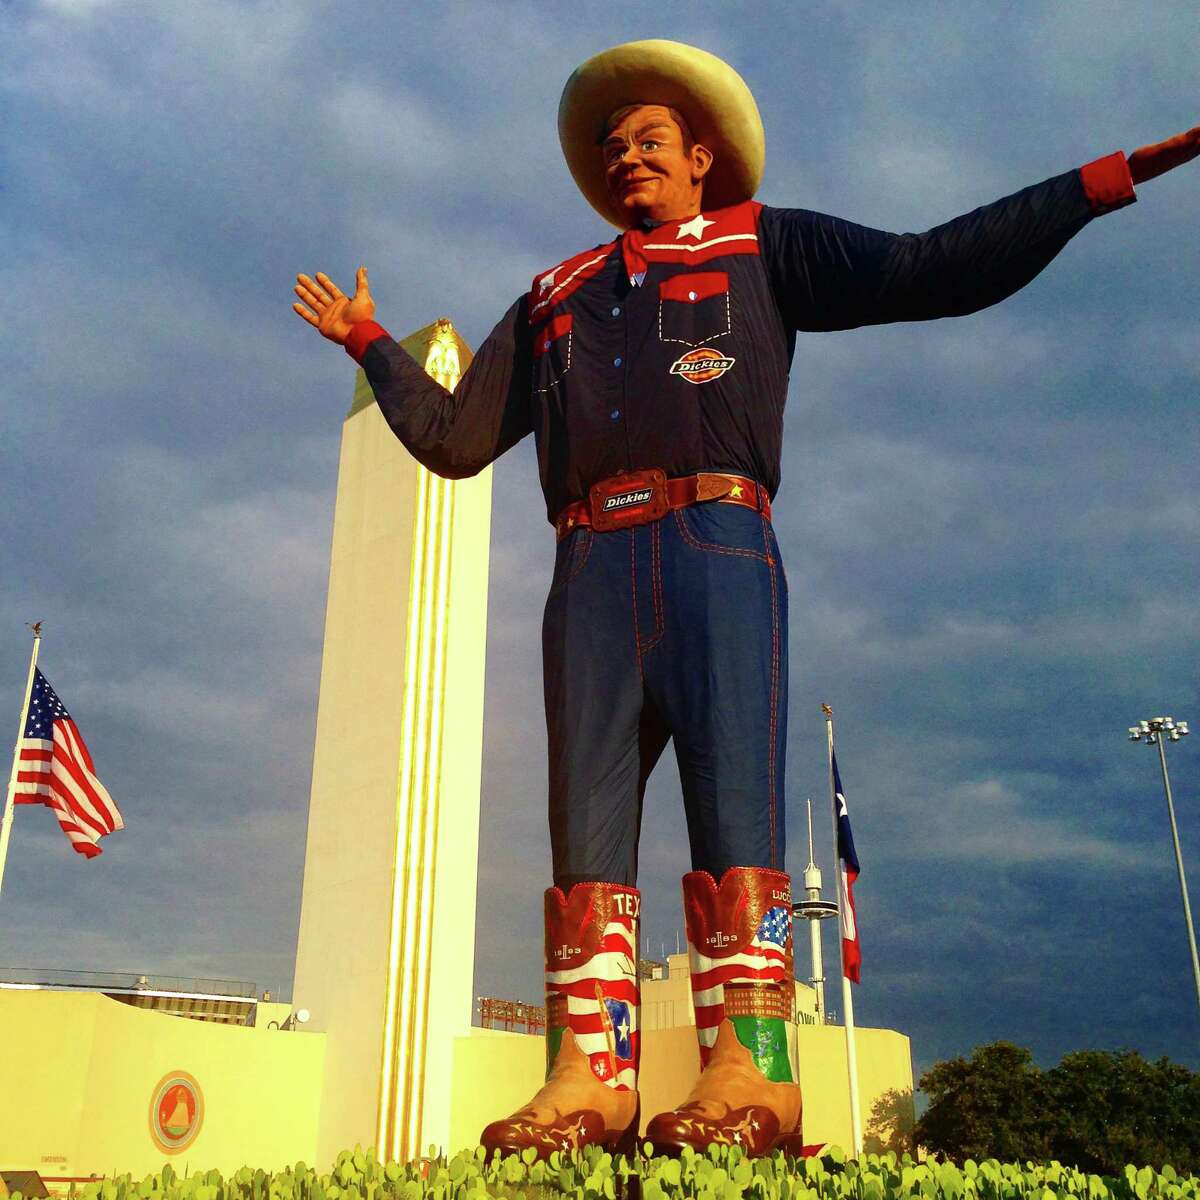 Big Tex reigns over the Texas State Fair